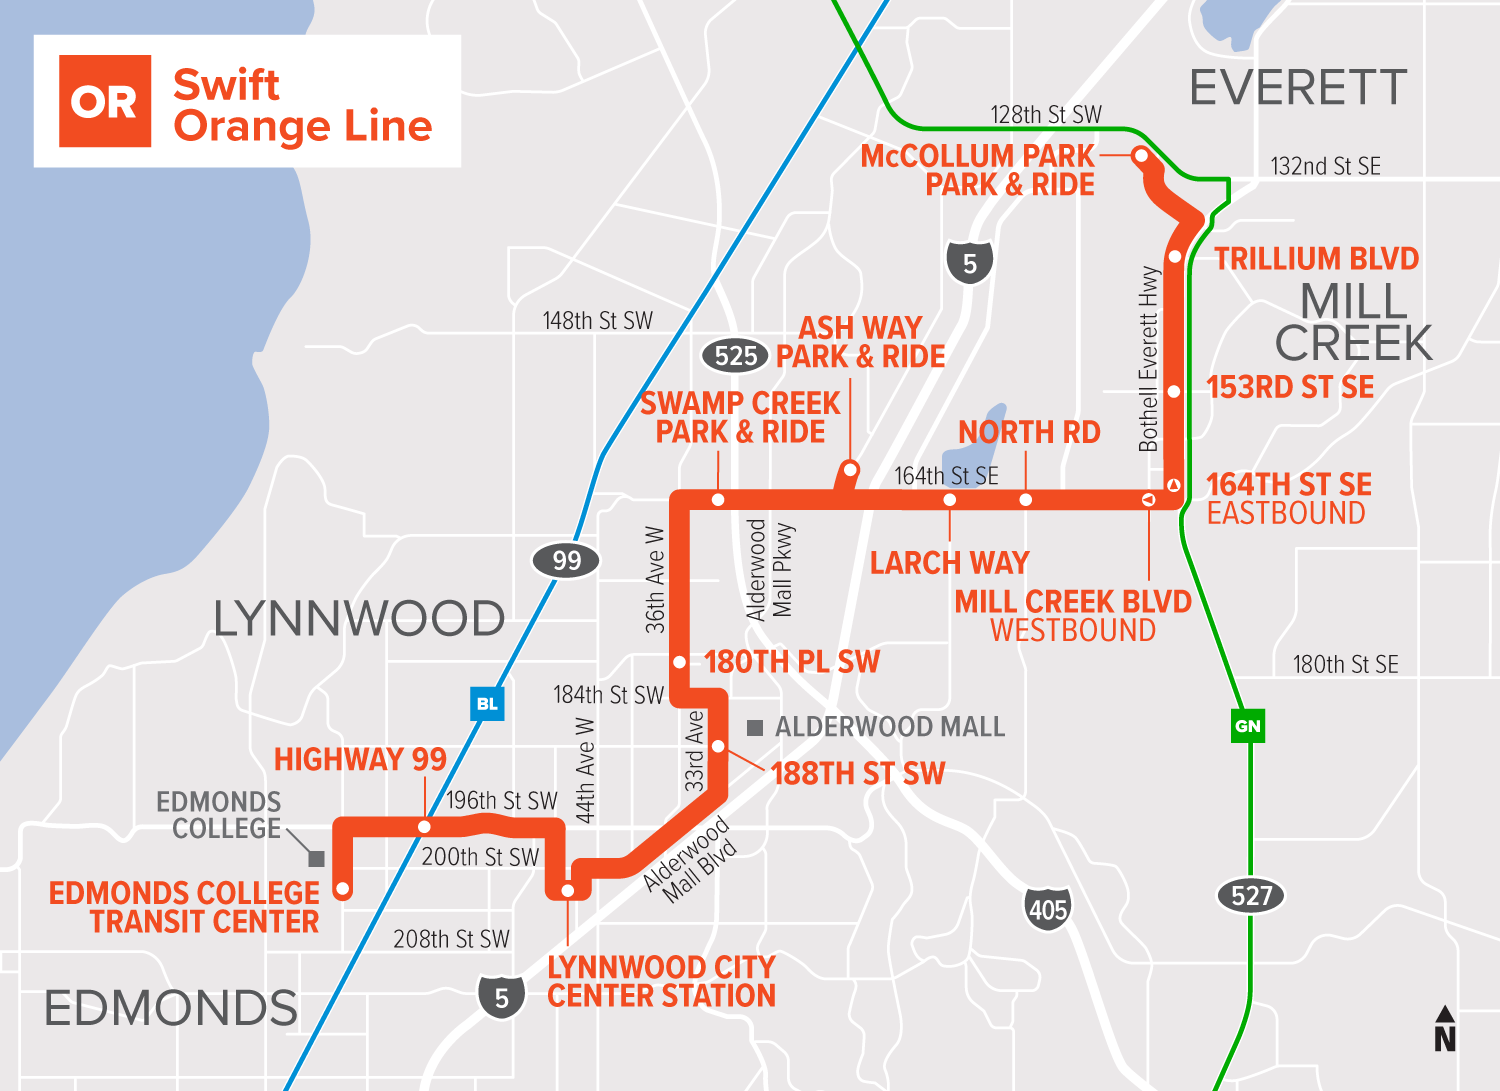 Swift Orange Line map